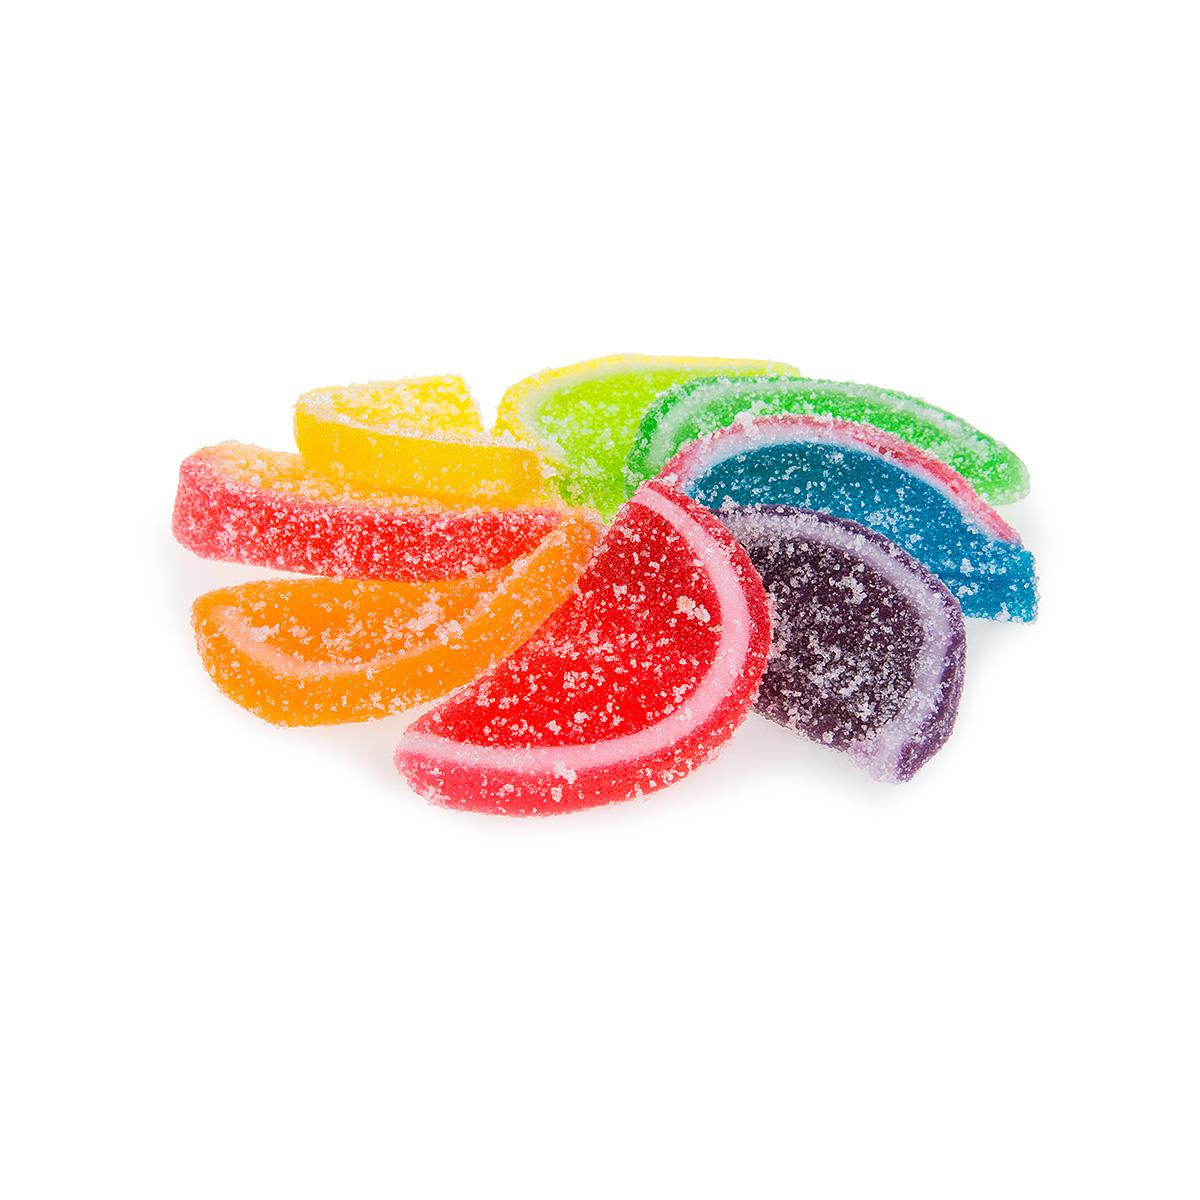 Mini Jelly Fruit Slices